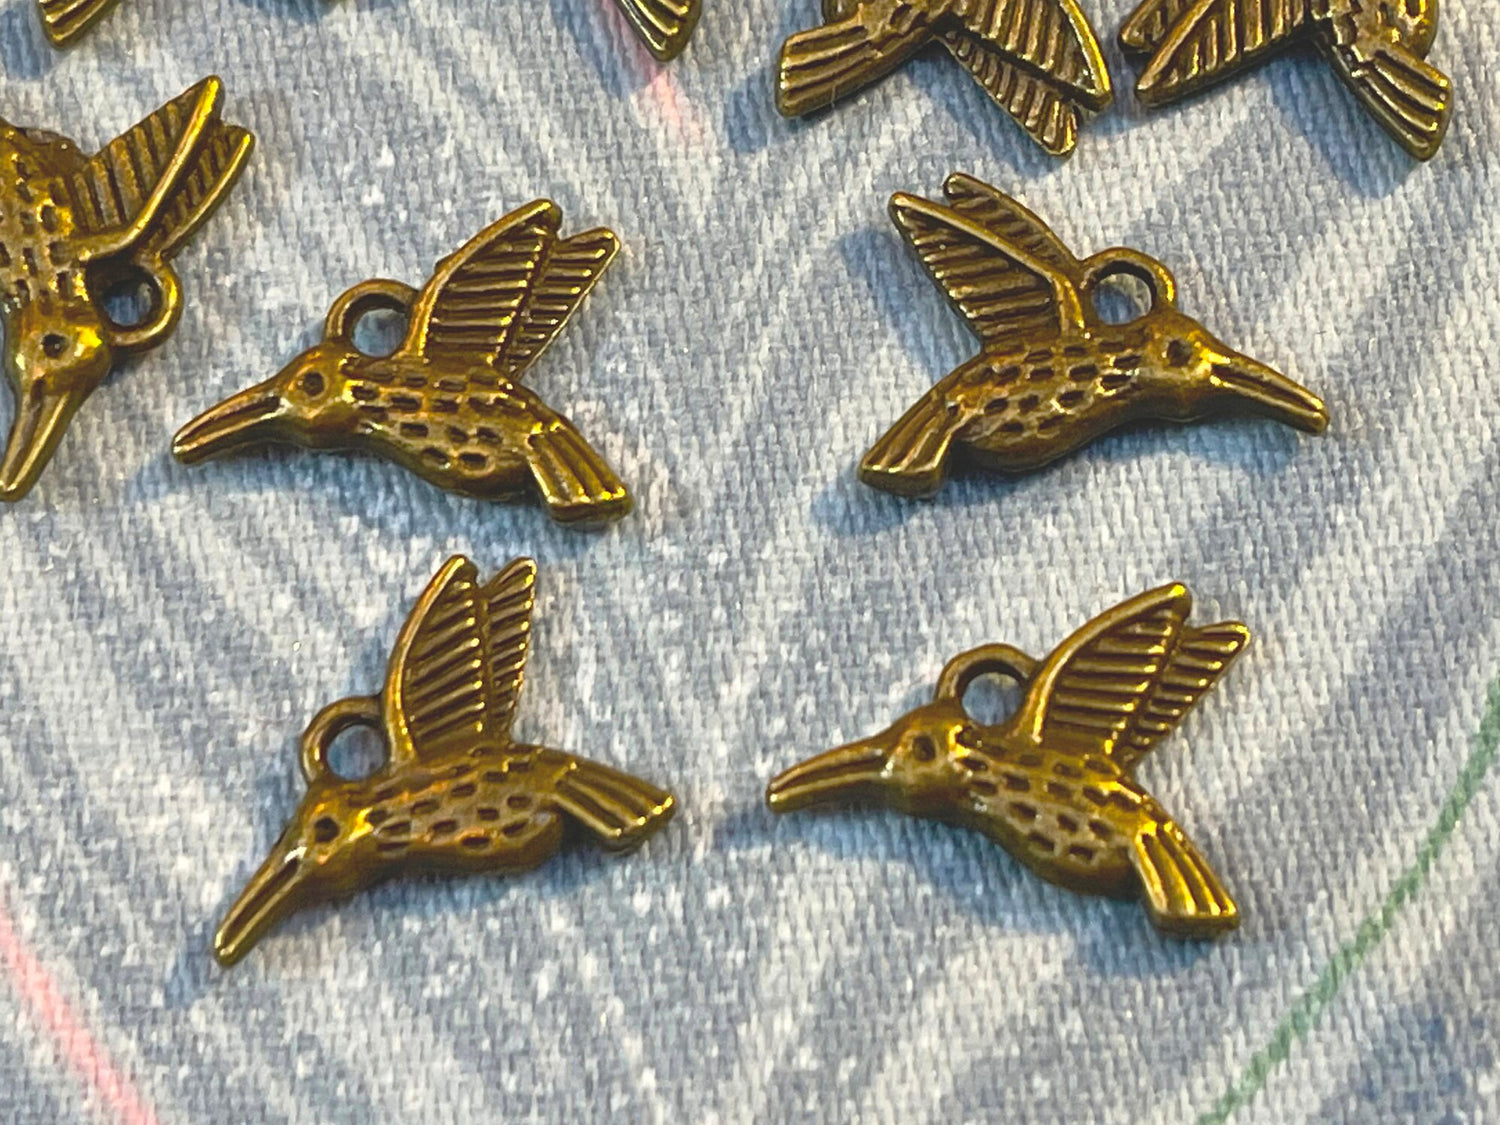 Antique brass hummingbird charm - 18x14 mm - bird in flight - bird-watcher gift - pendant - personalized charm bracelet - mother's day gift